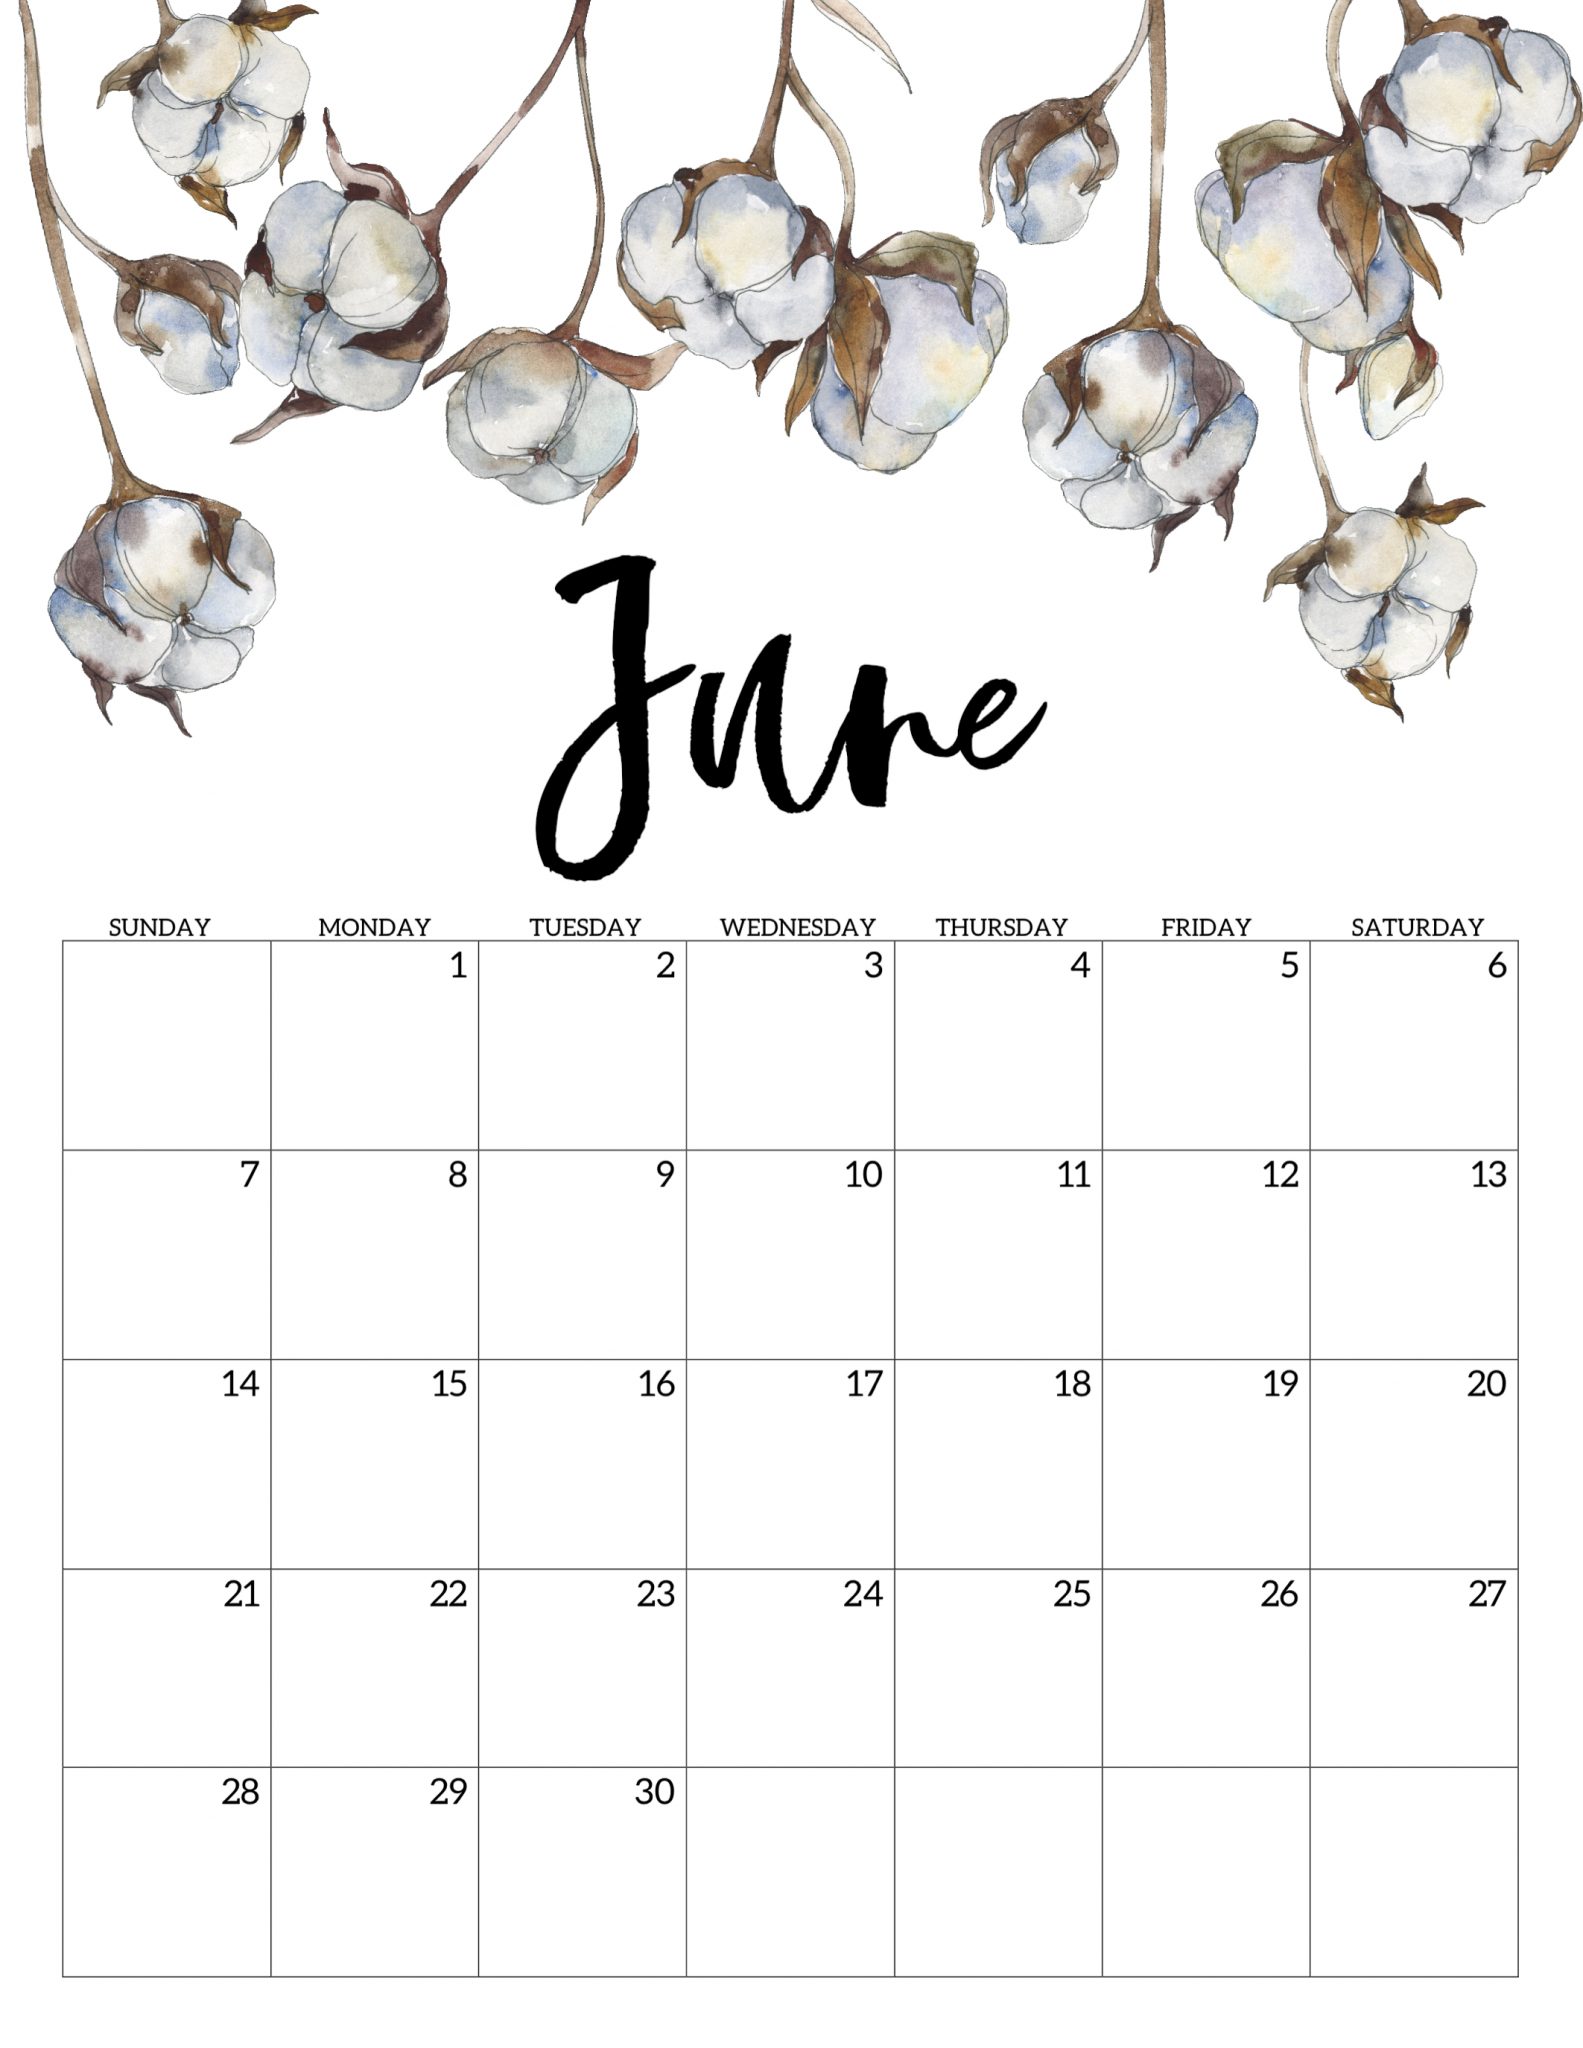 June 2020 Floral Calendar